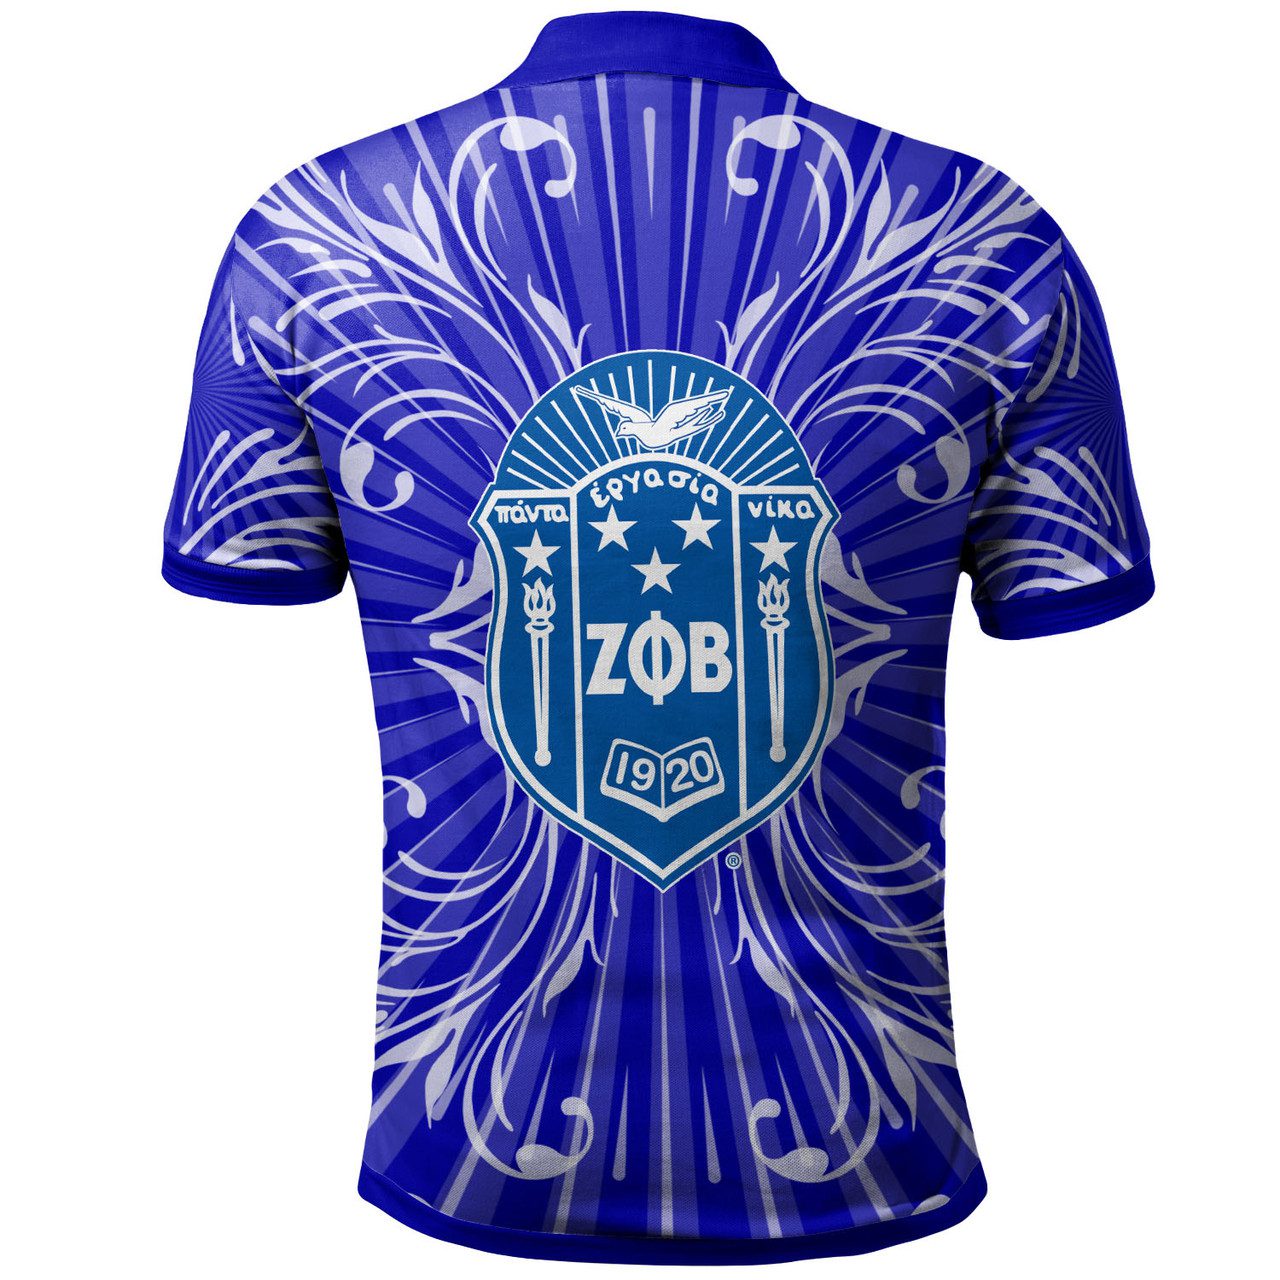 Zeta Phi Beta Polo Shirt – Sorority Vintage Style Polo Shirt